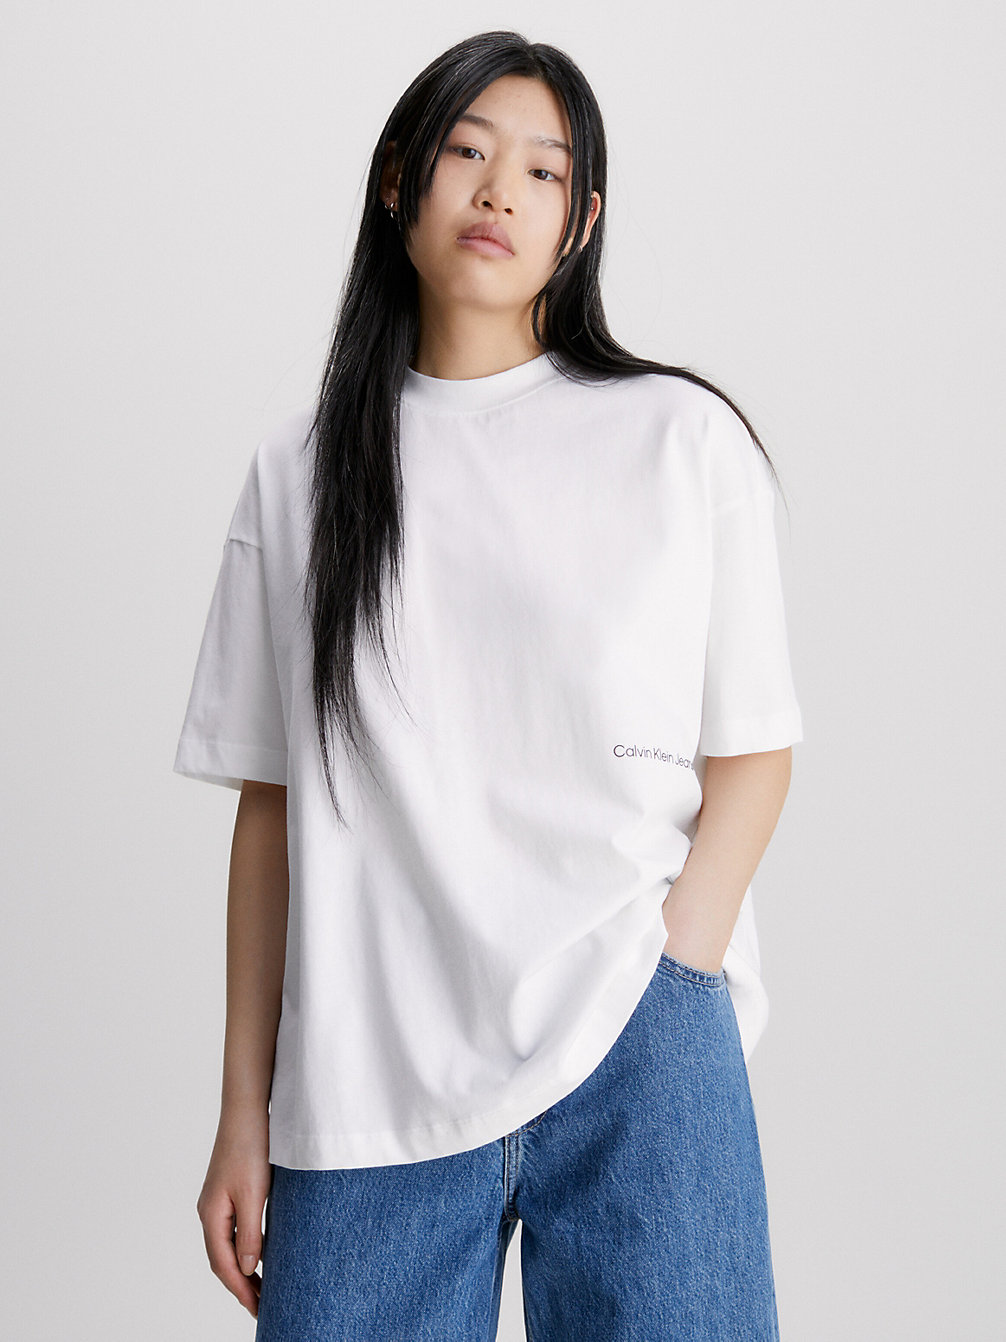 T-Shirt Con Stampa Fotografica Dal Taglio Relaxed > BRIGHT WHITE > undefined donna > Calvin Klein